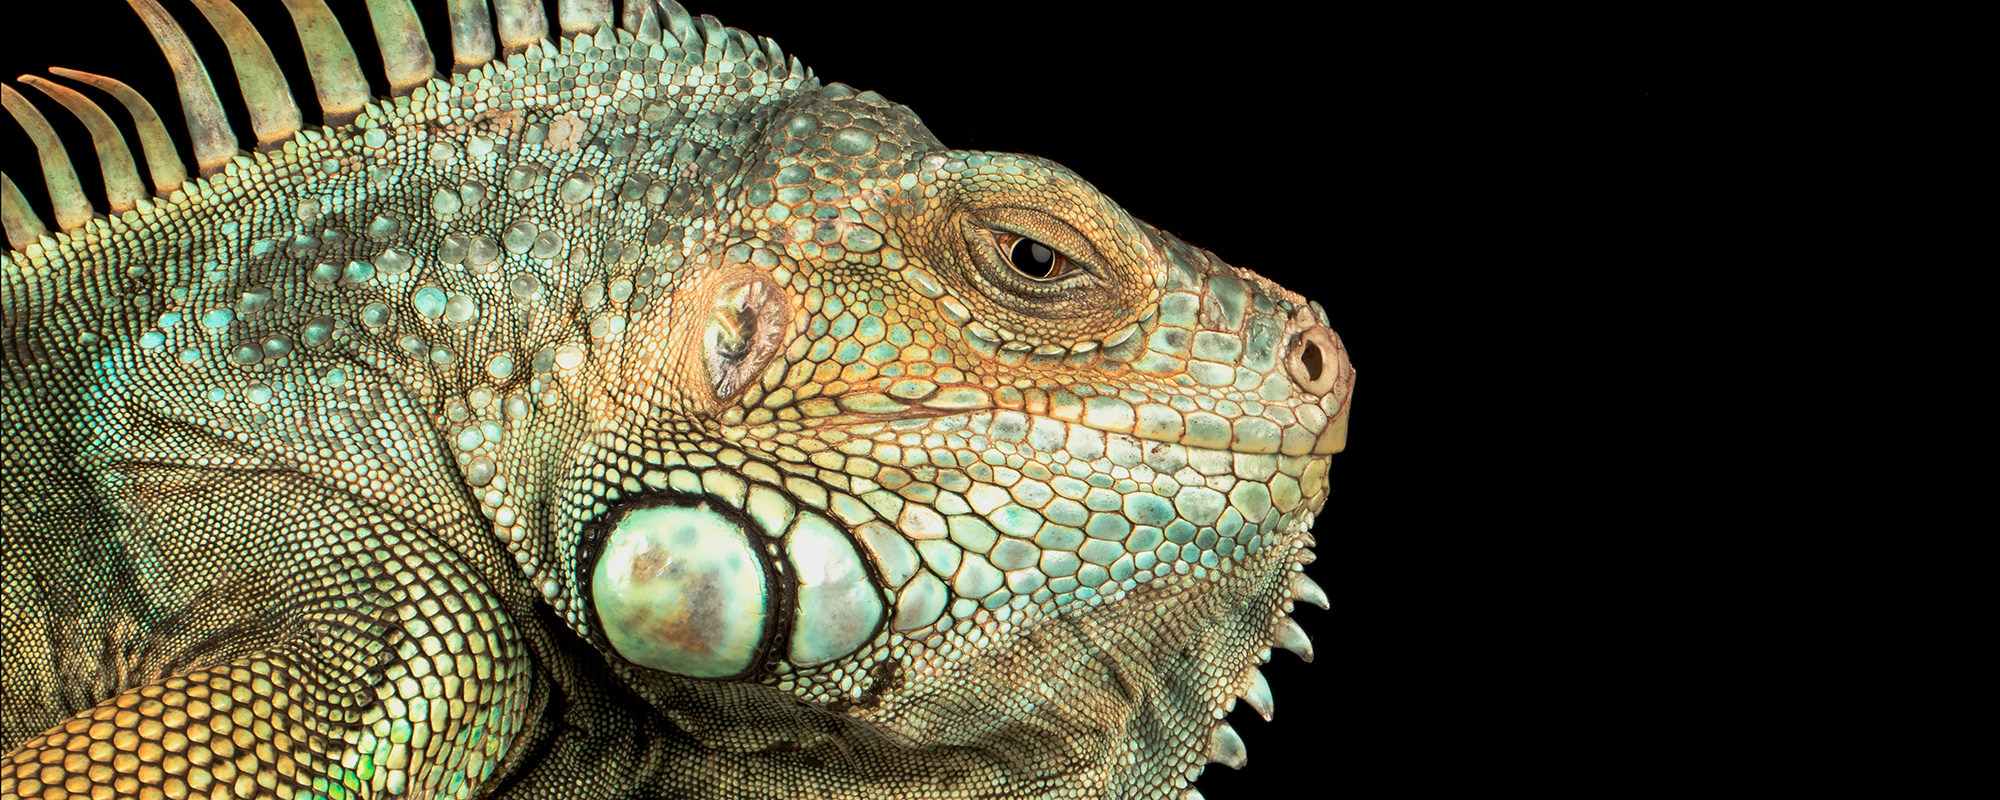 A closeup of a green scaled reptile.